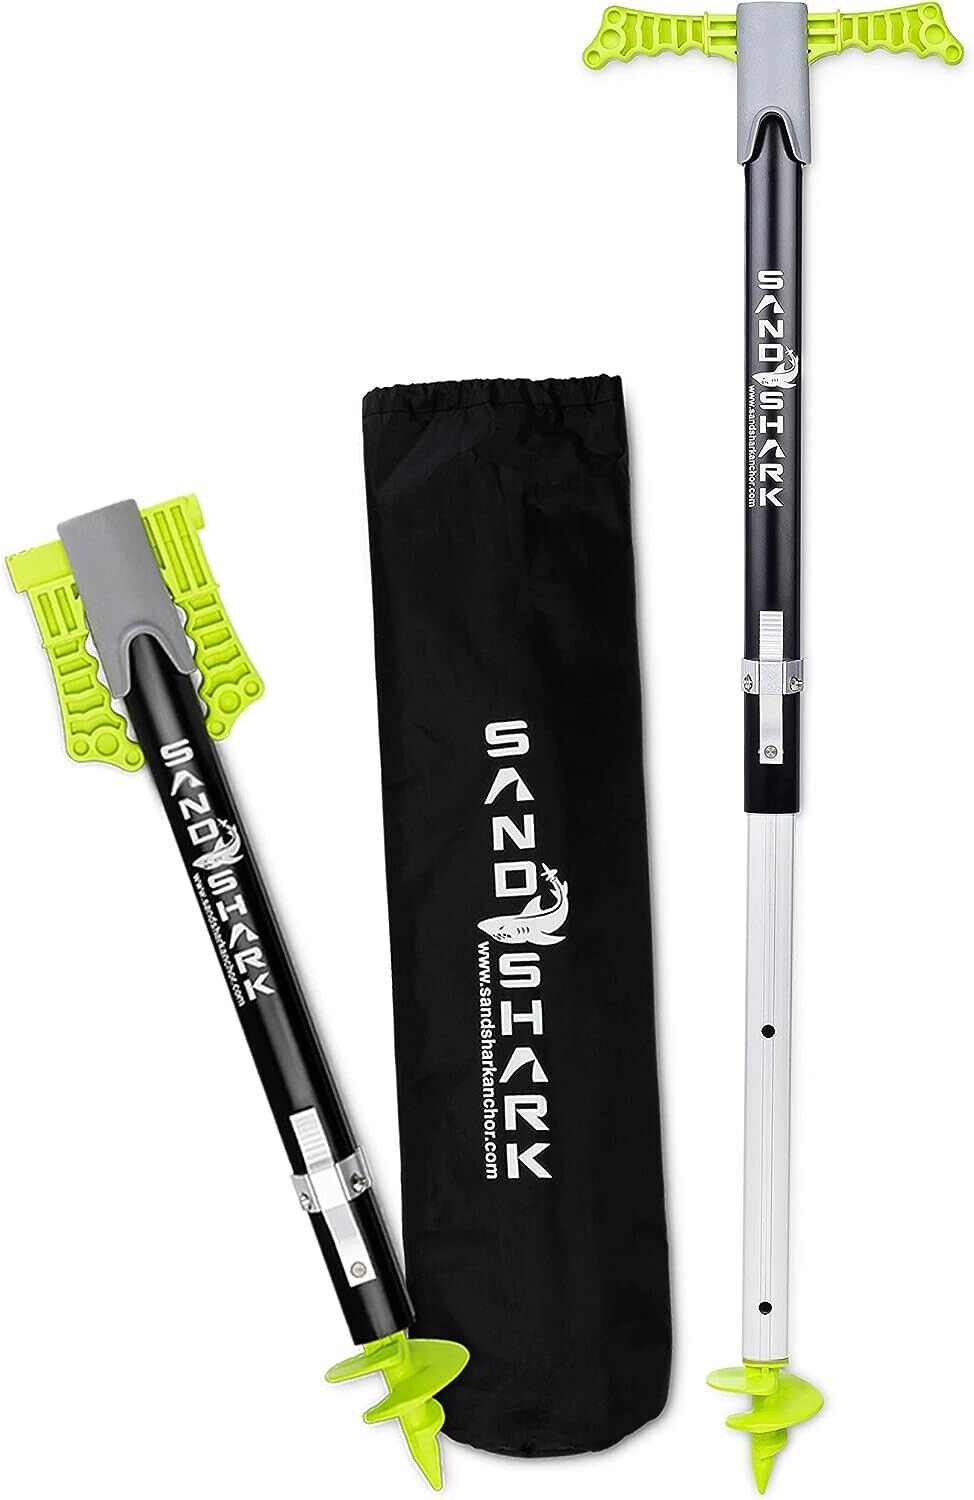 SandShark Premium SuperSport Anchor Perfect Gift